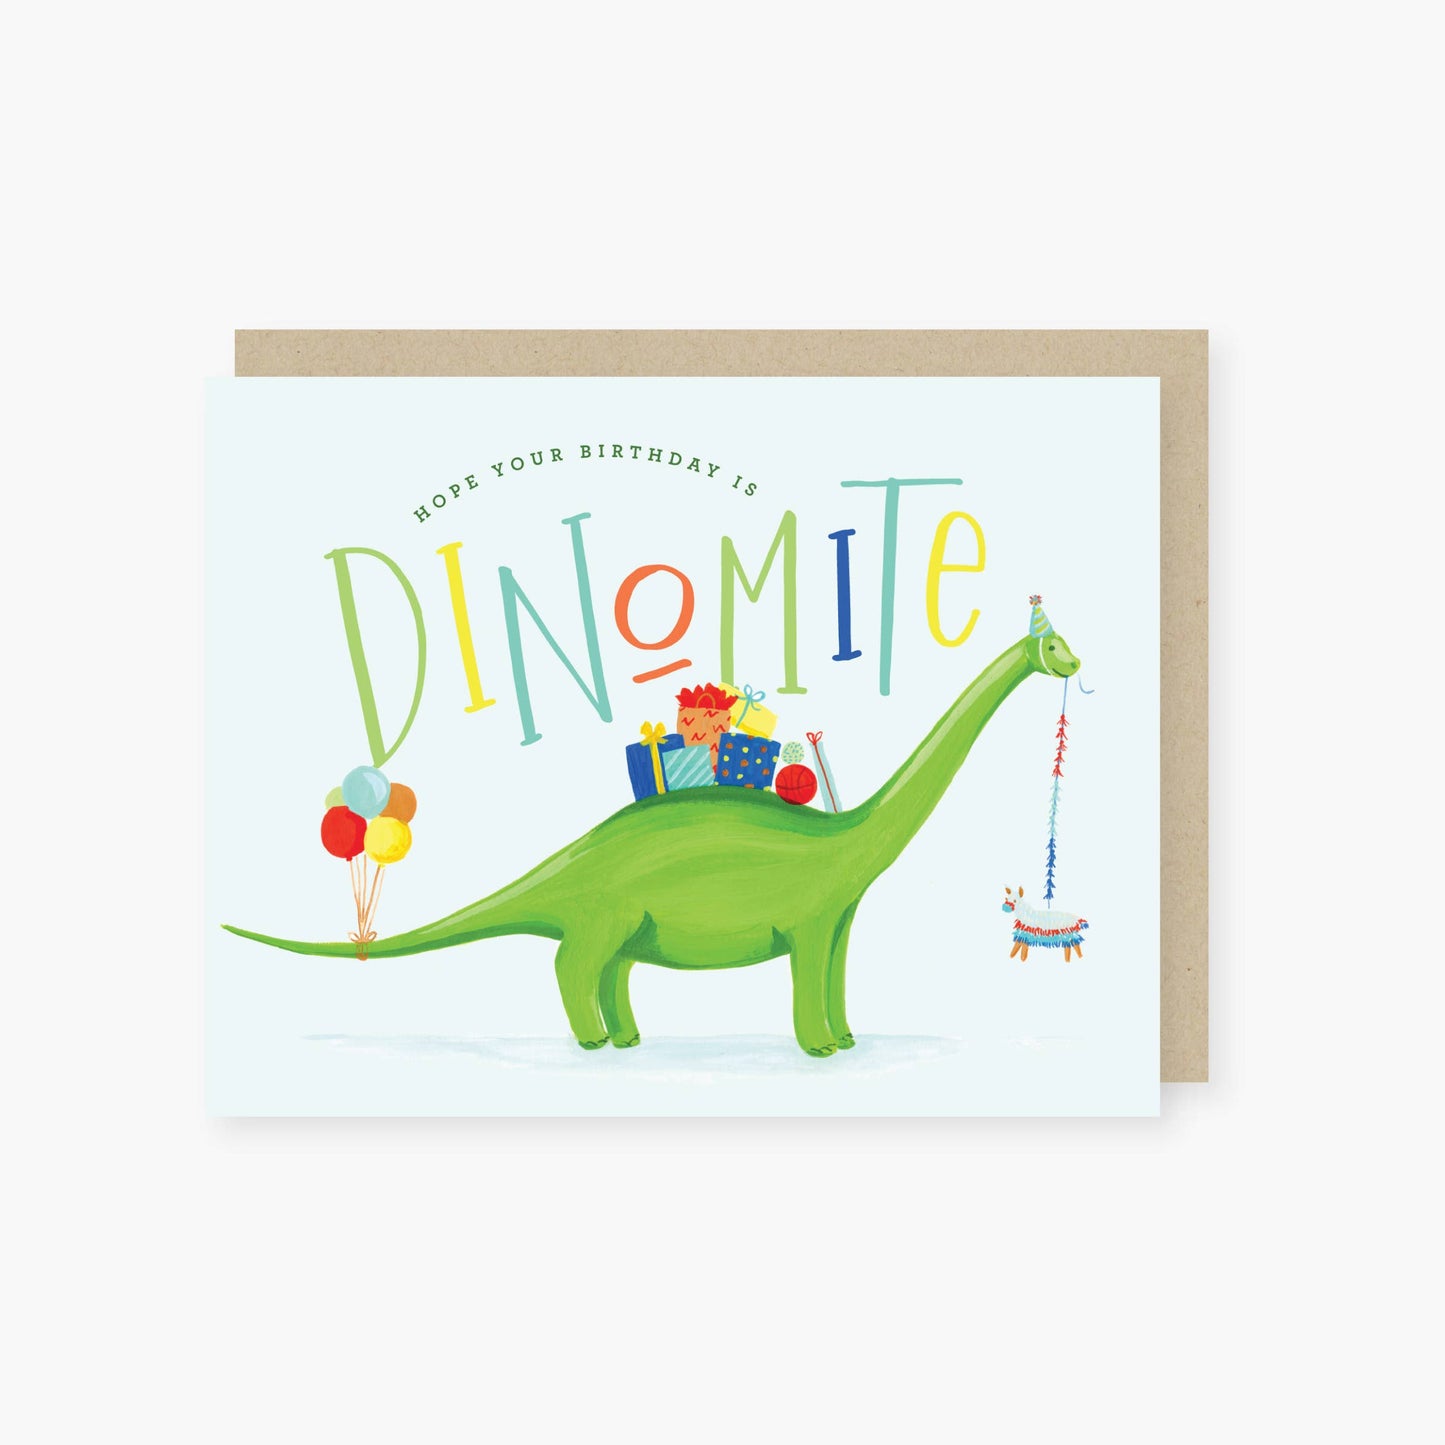 dino-mite birthday card